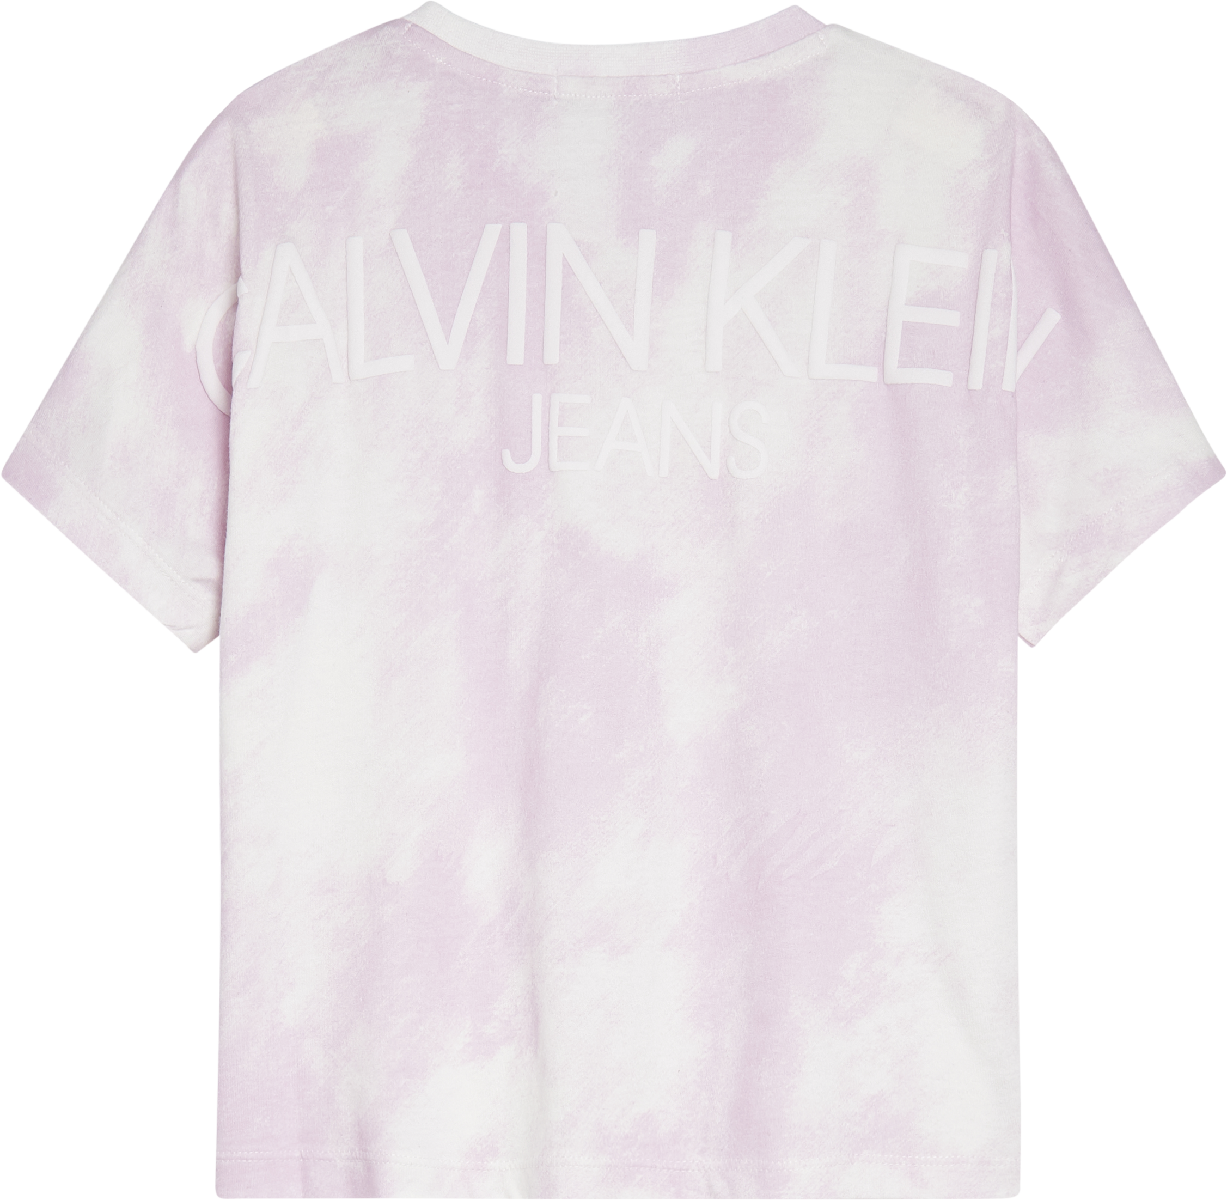 Meisjes CLOUD AOP BOXY T-SHIRT van Calvin Klein in de kleur Digital Cloud Aop Lavender Pink in maat 176.